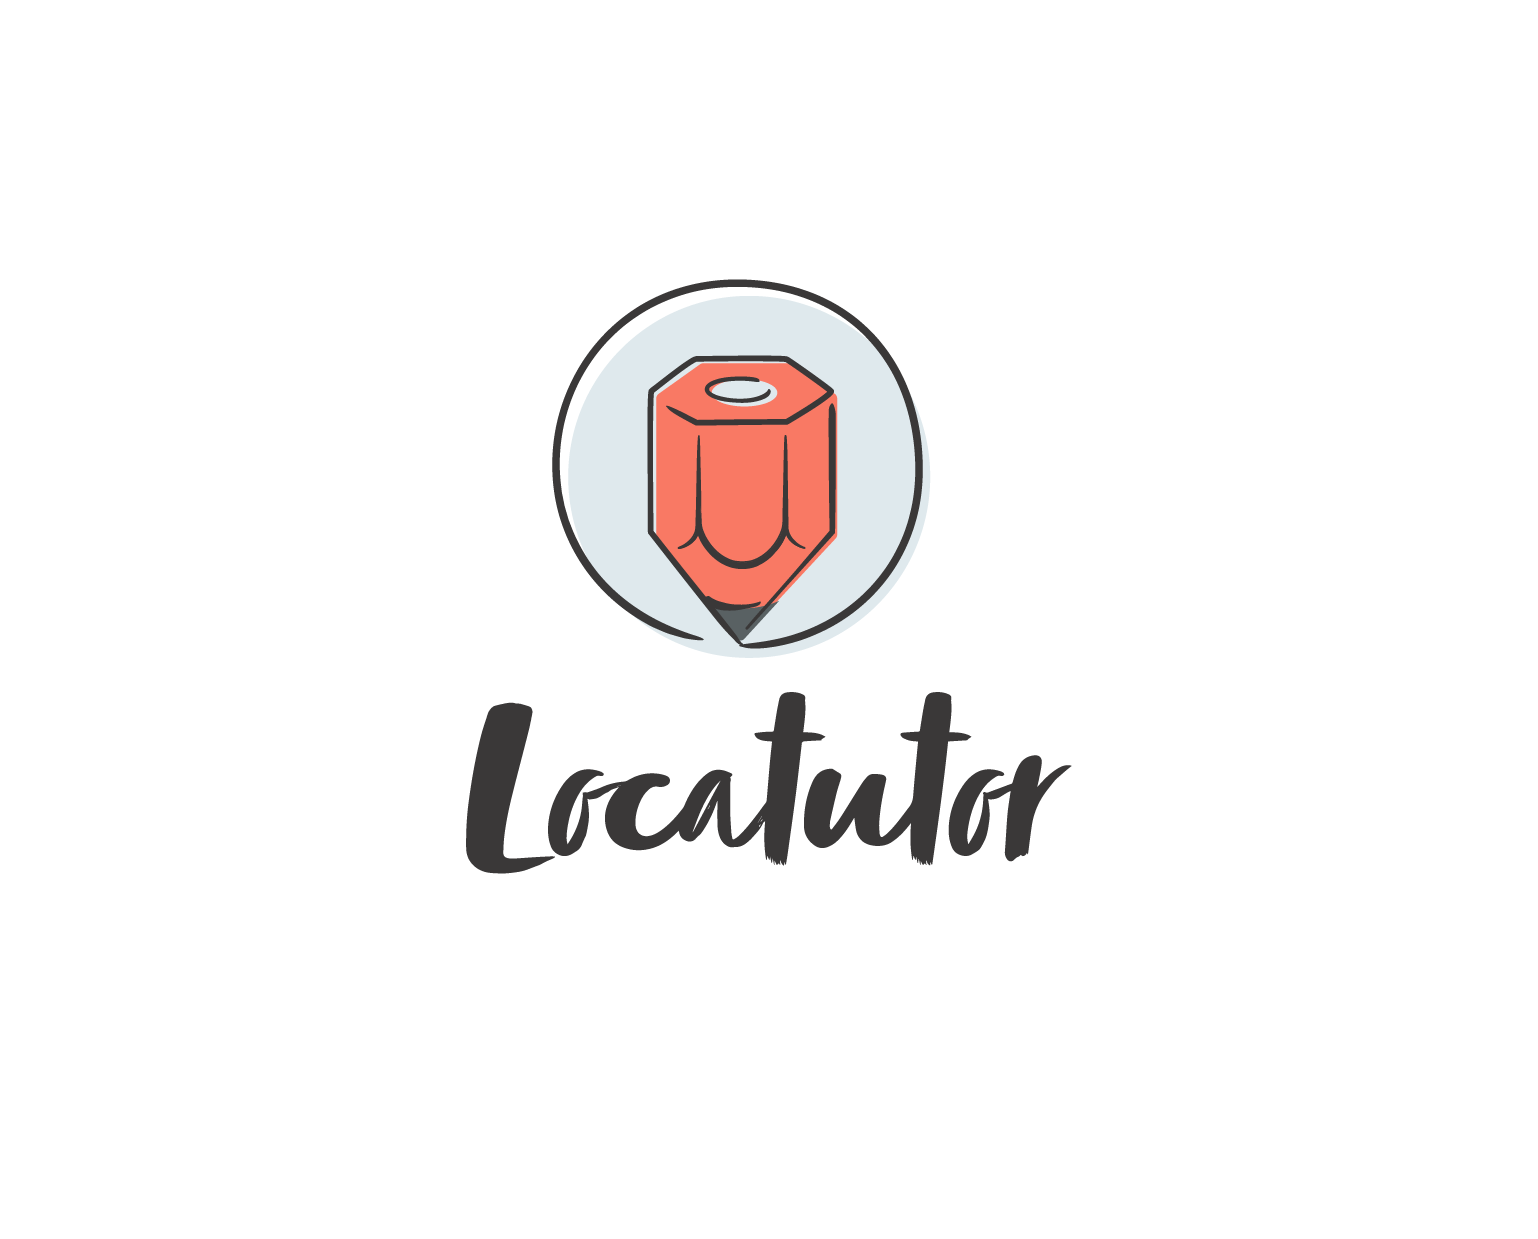 Locatutor - Brand development and logo design